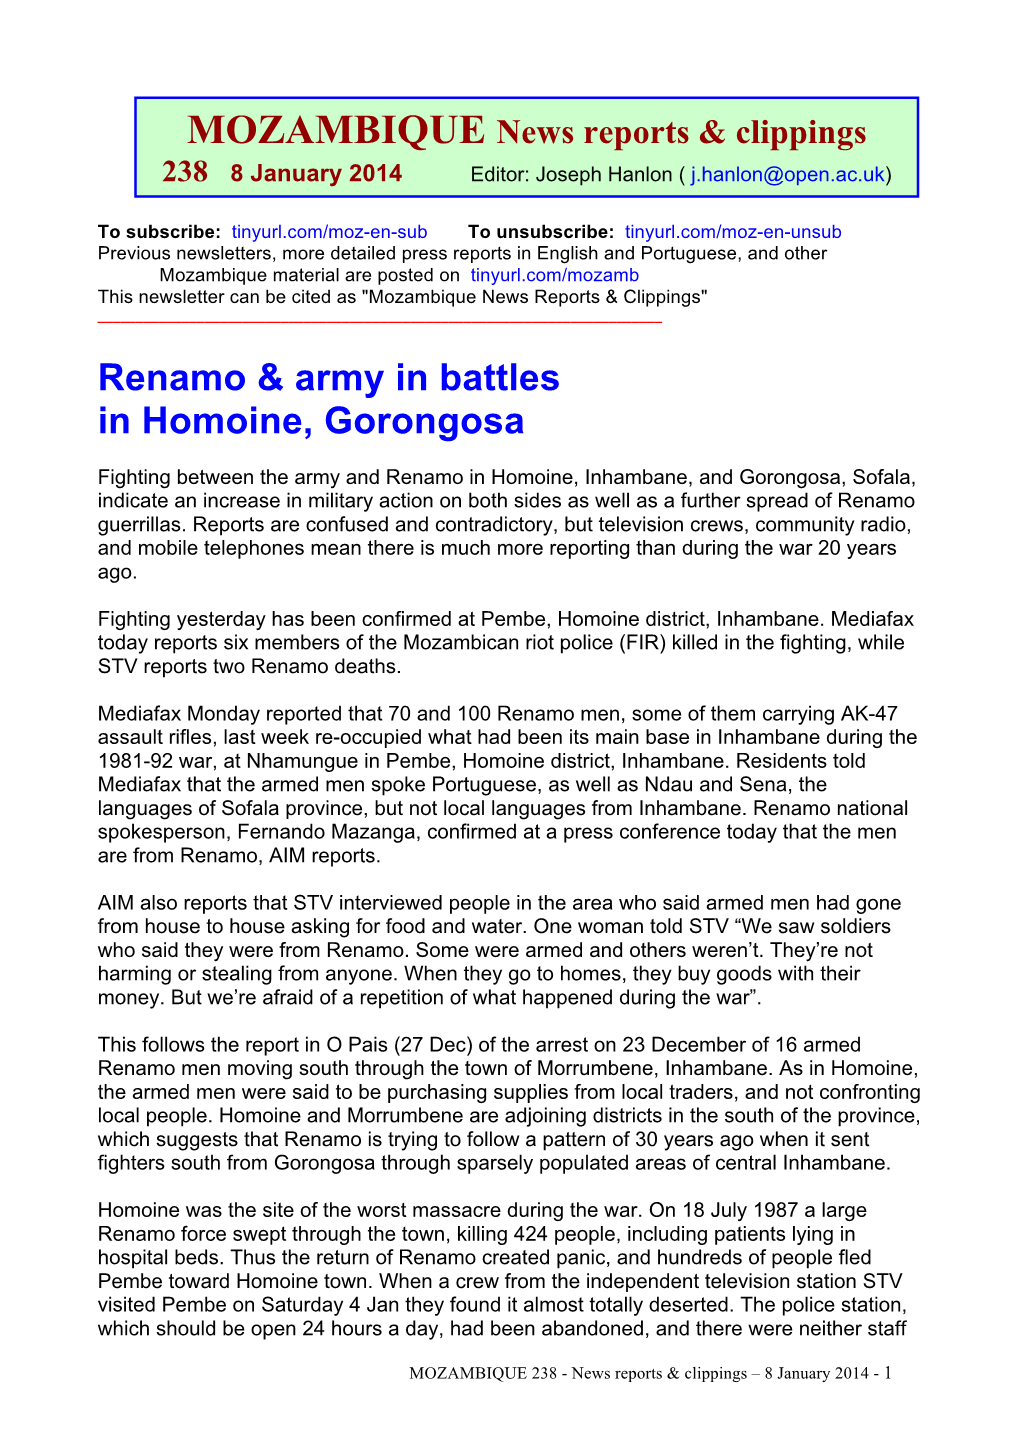 Renamo & Army in Battles in Homoine, Gorongosa